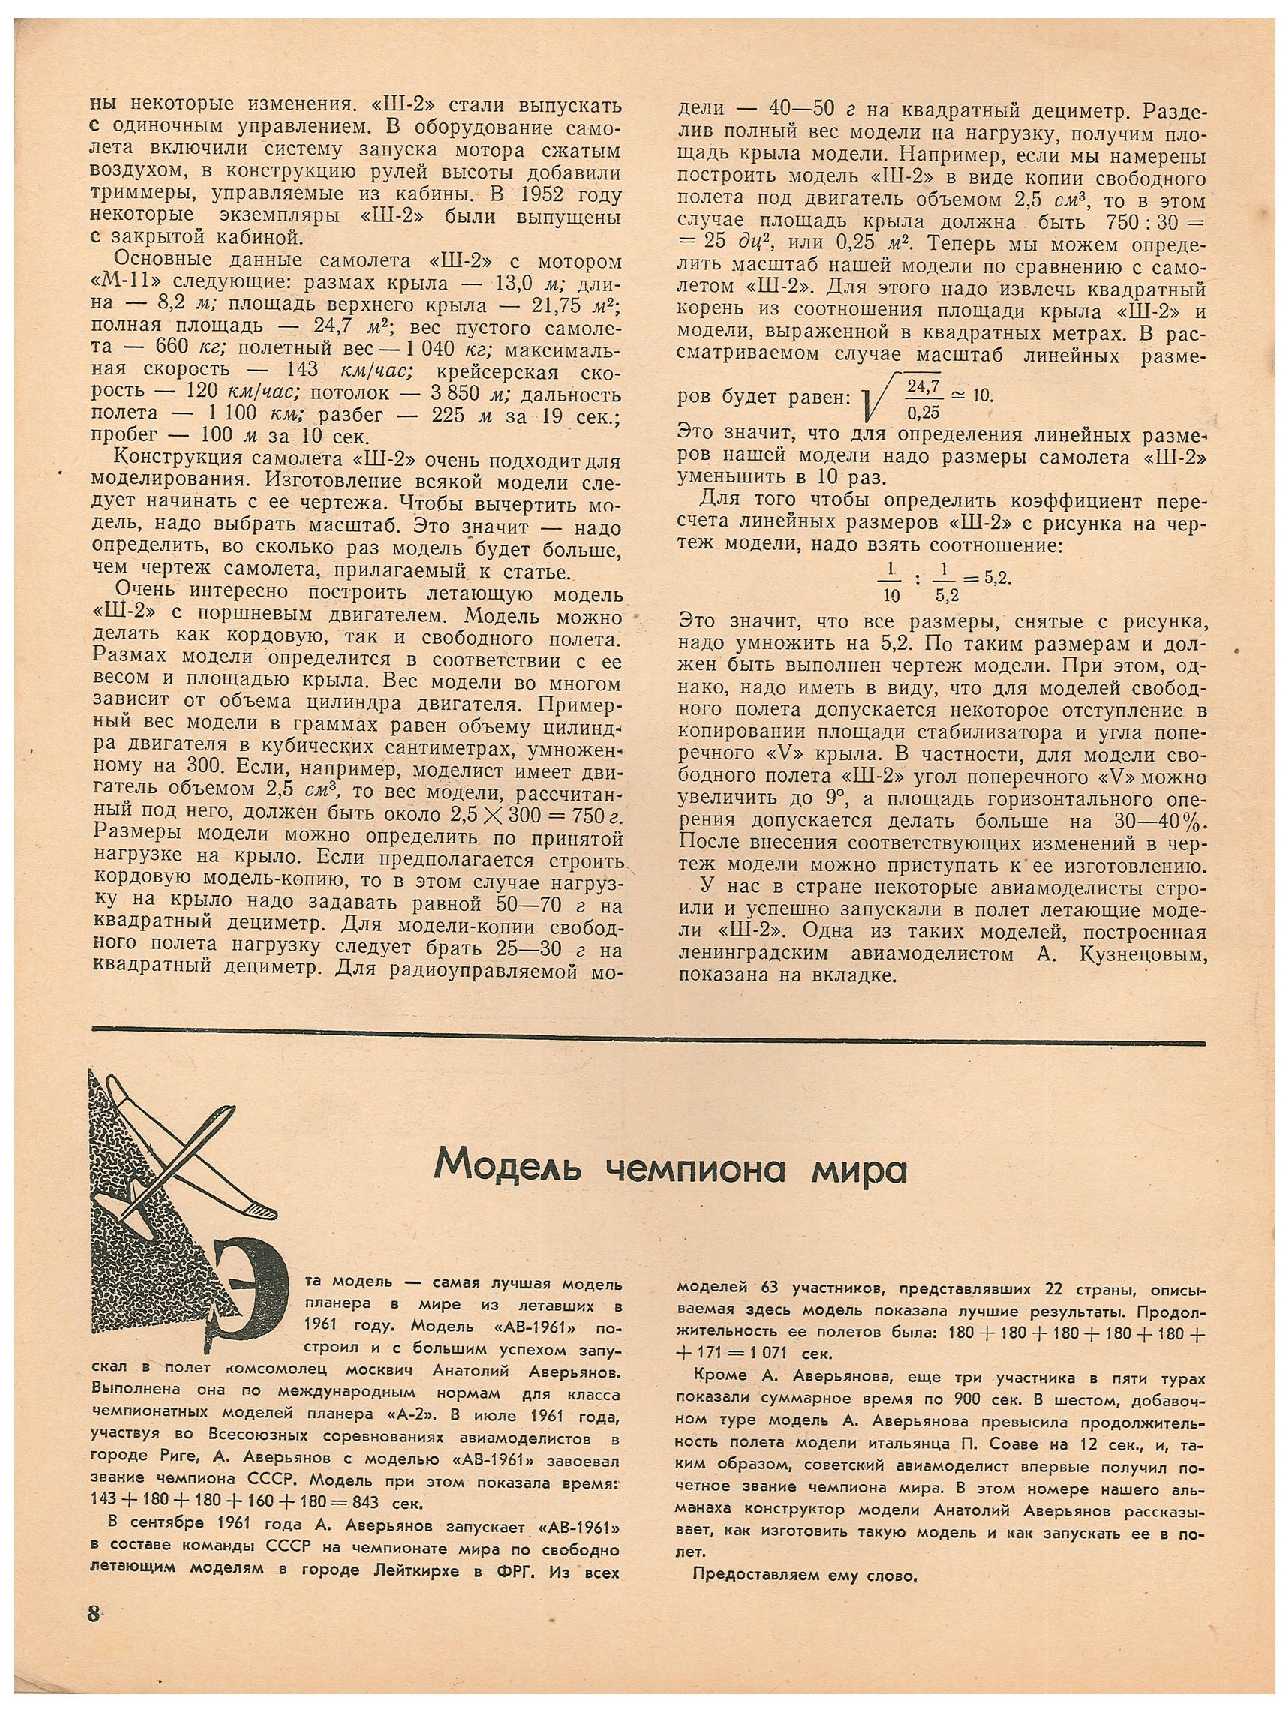 ЮМК 1, 1962, 8 c.